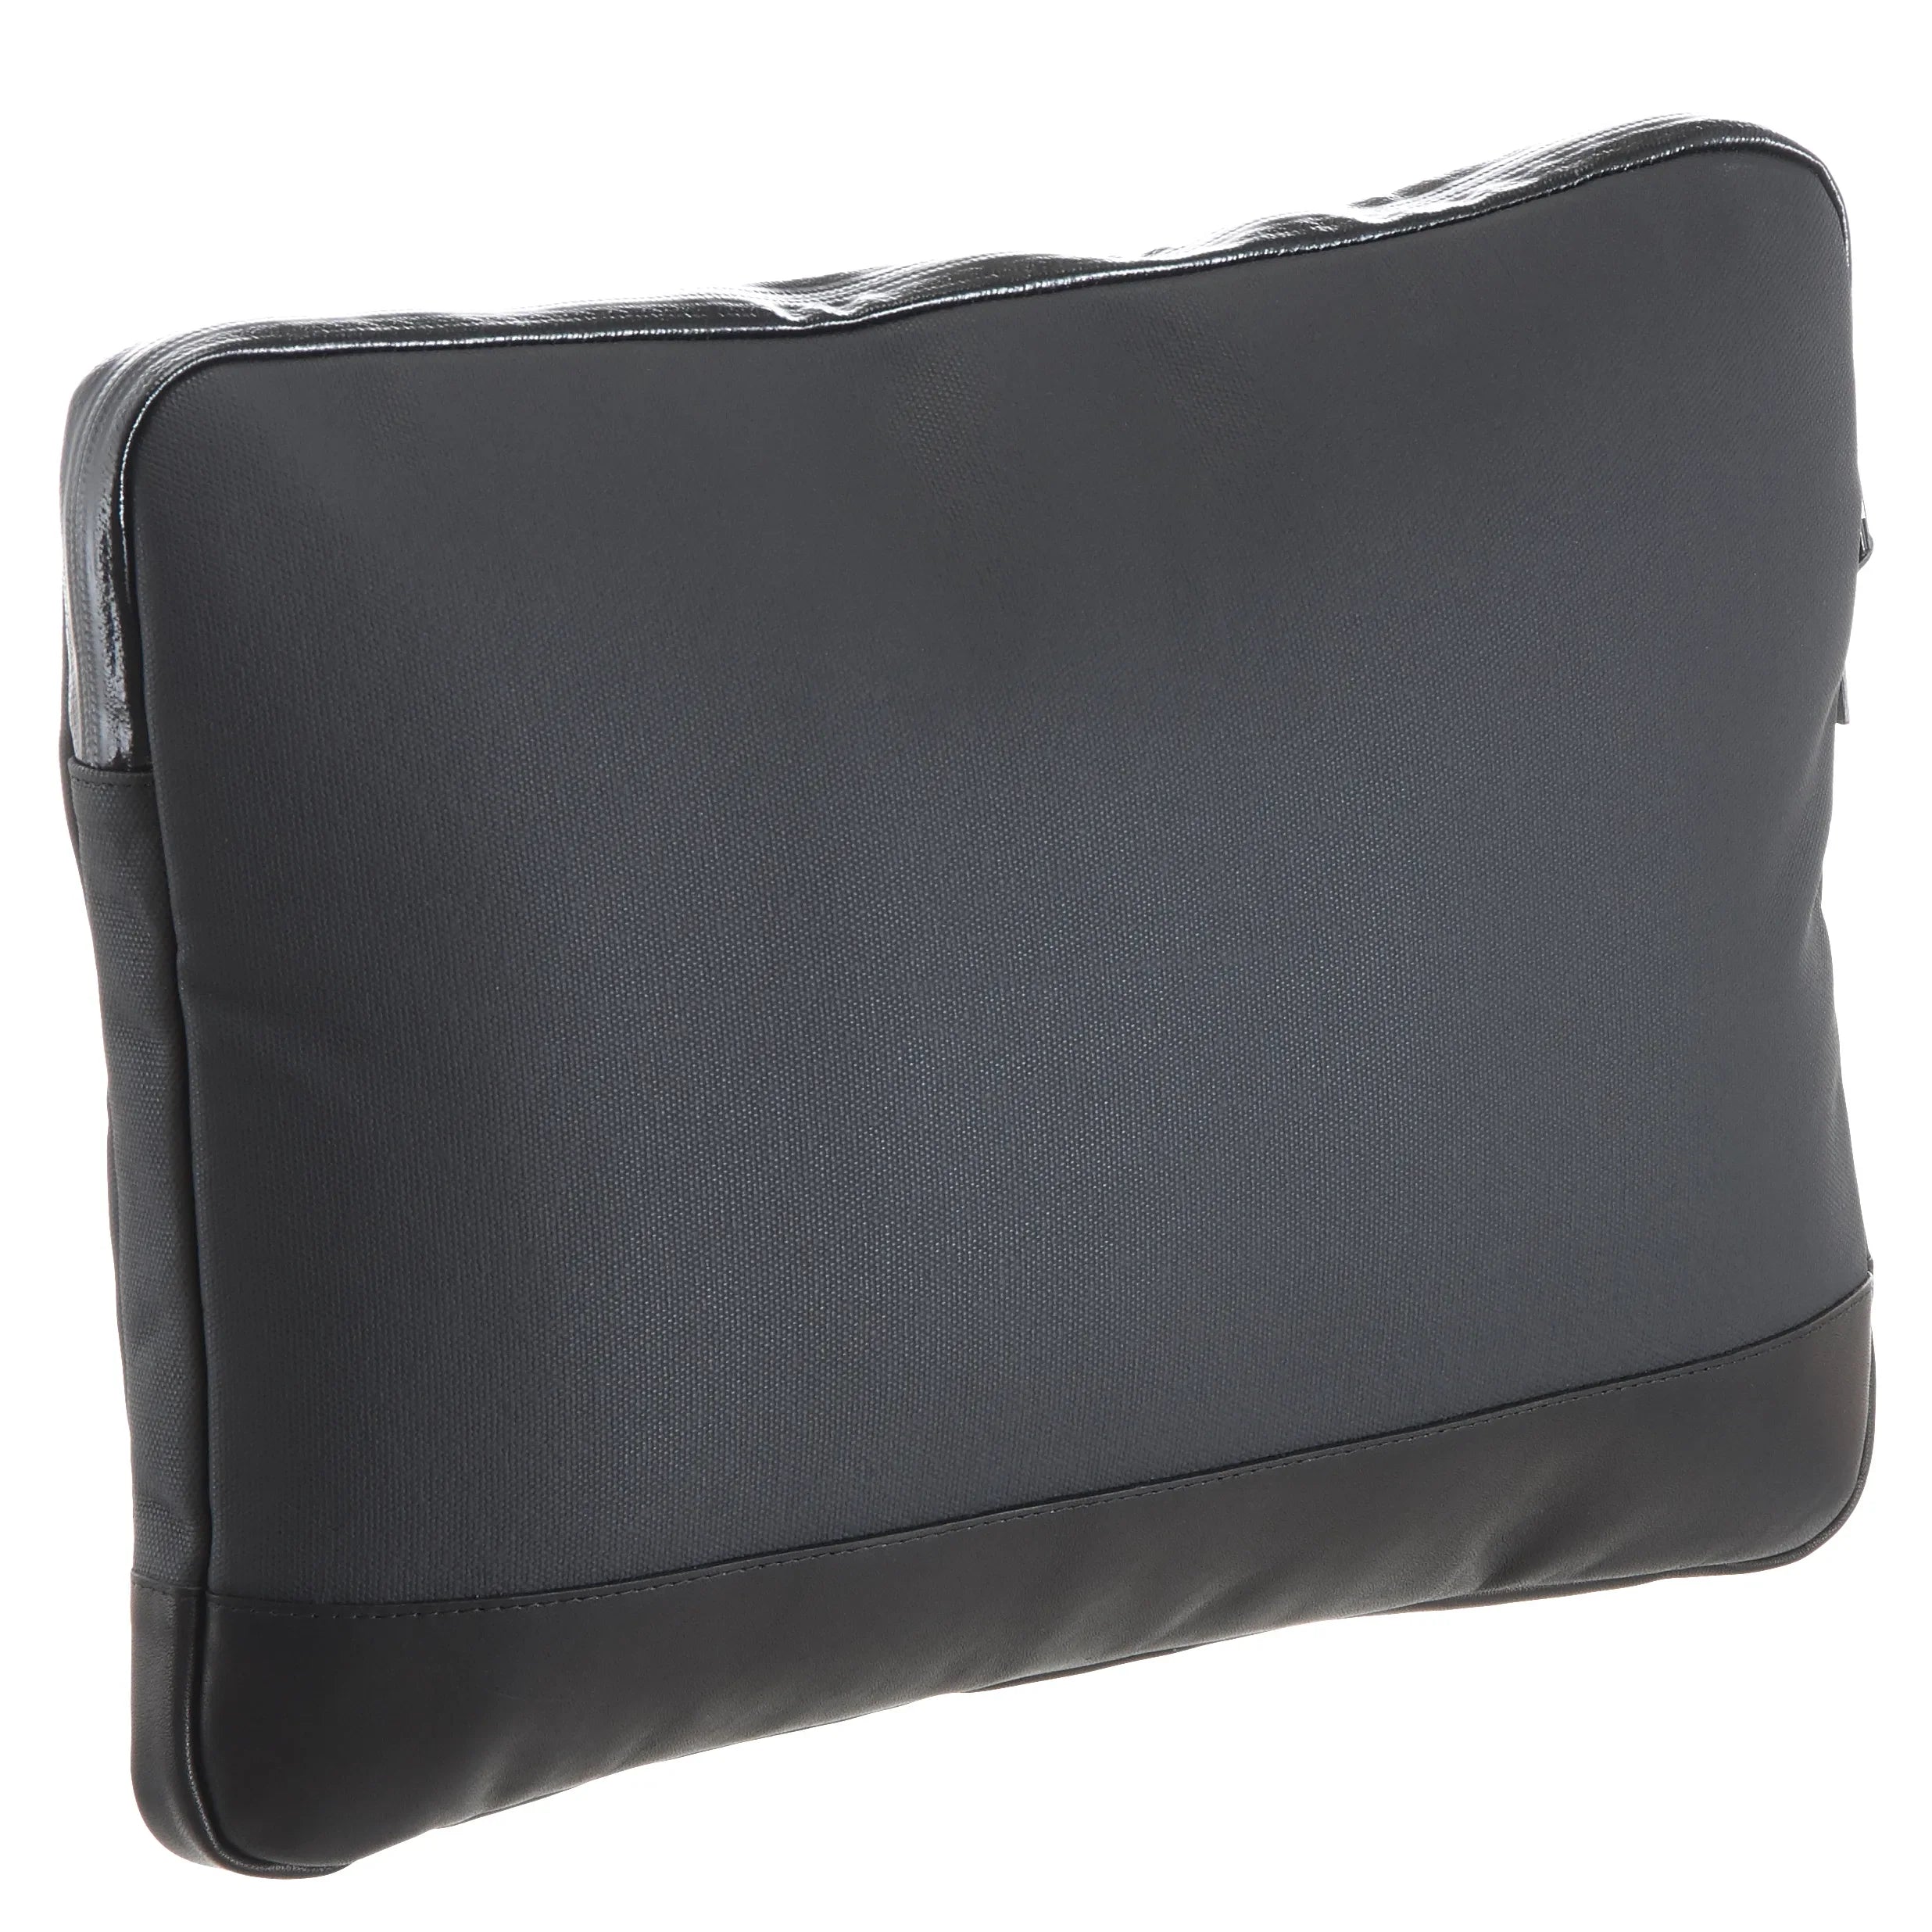 Jost Billund MacBook Pro laptop sleeve 15 inch - black